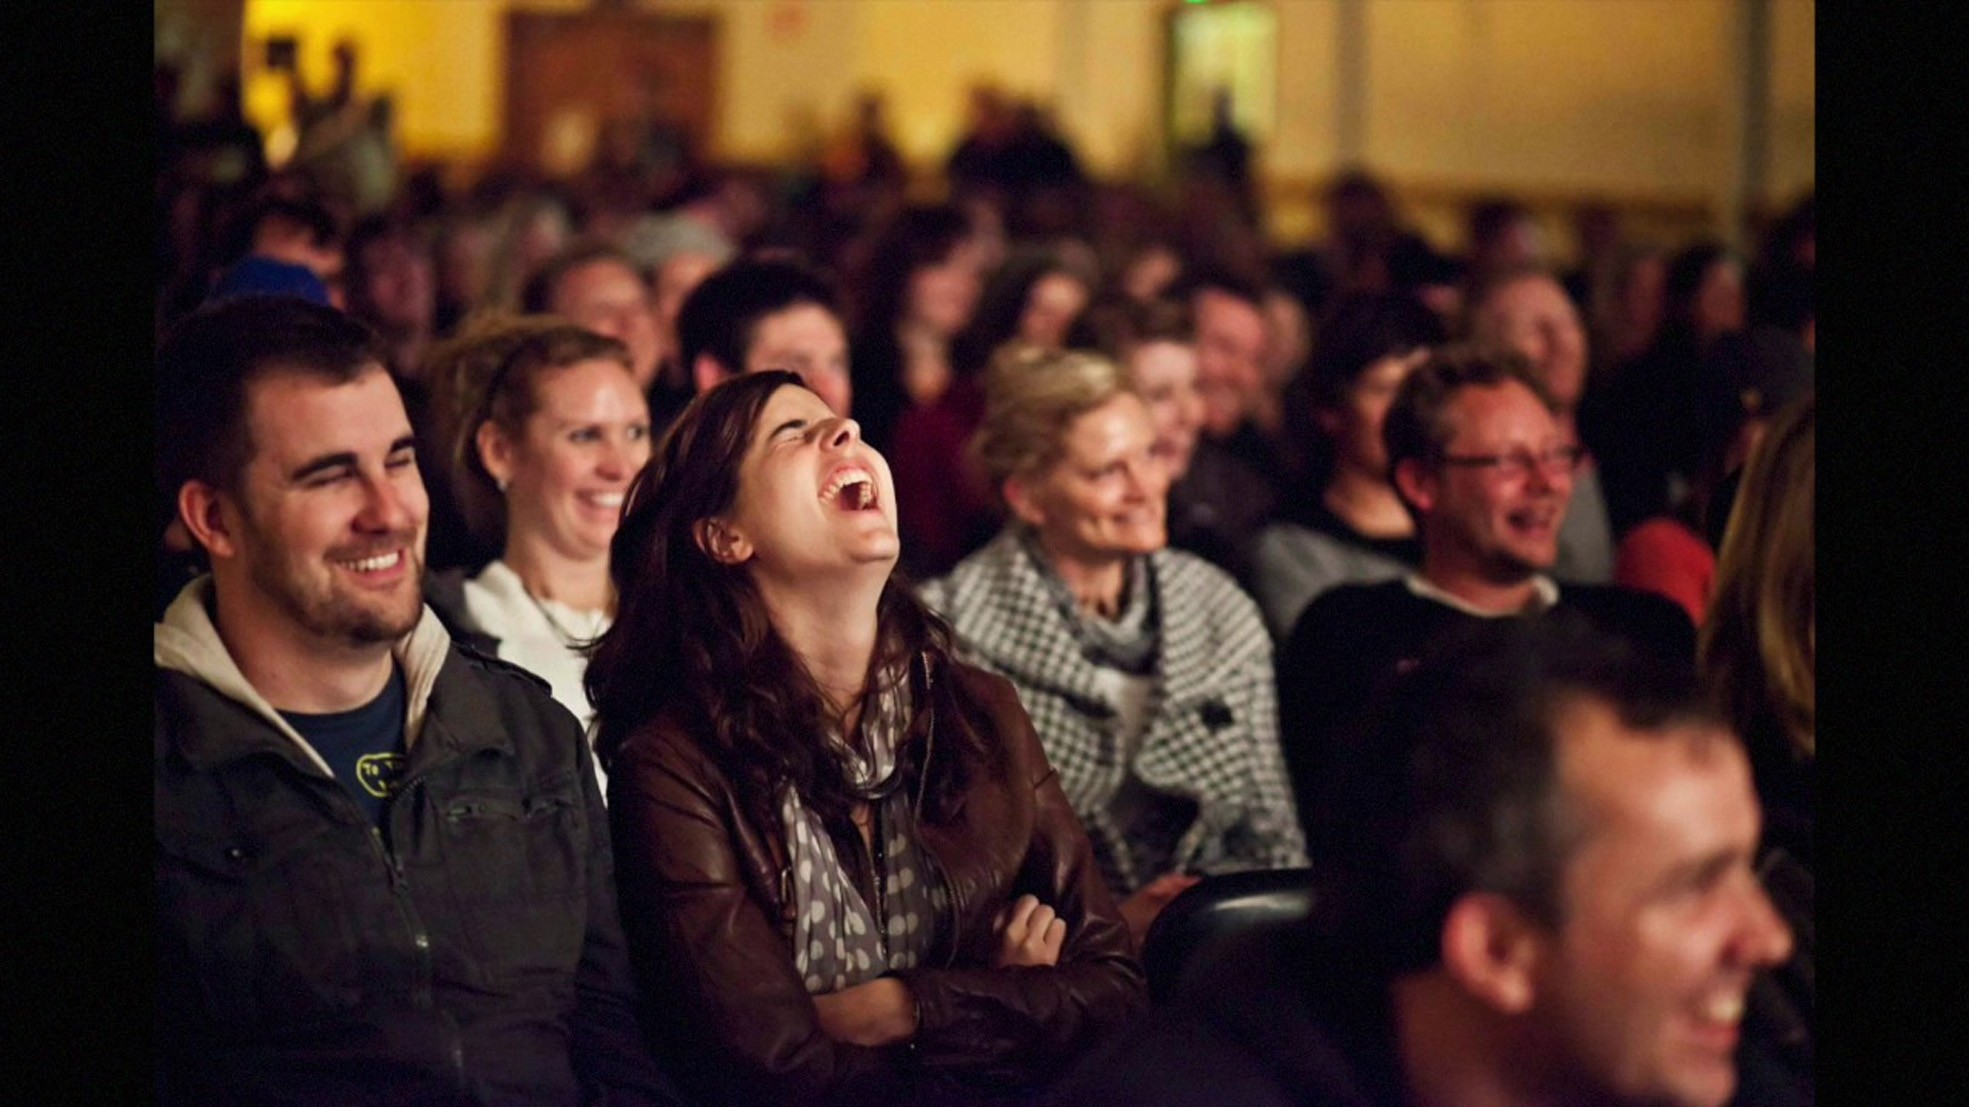 Theatre audience. Зрители в зале. Люди смеются в зале. Зрители в театре. Зрители смеются.